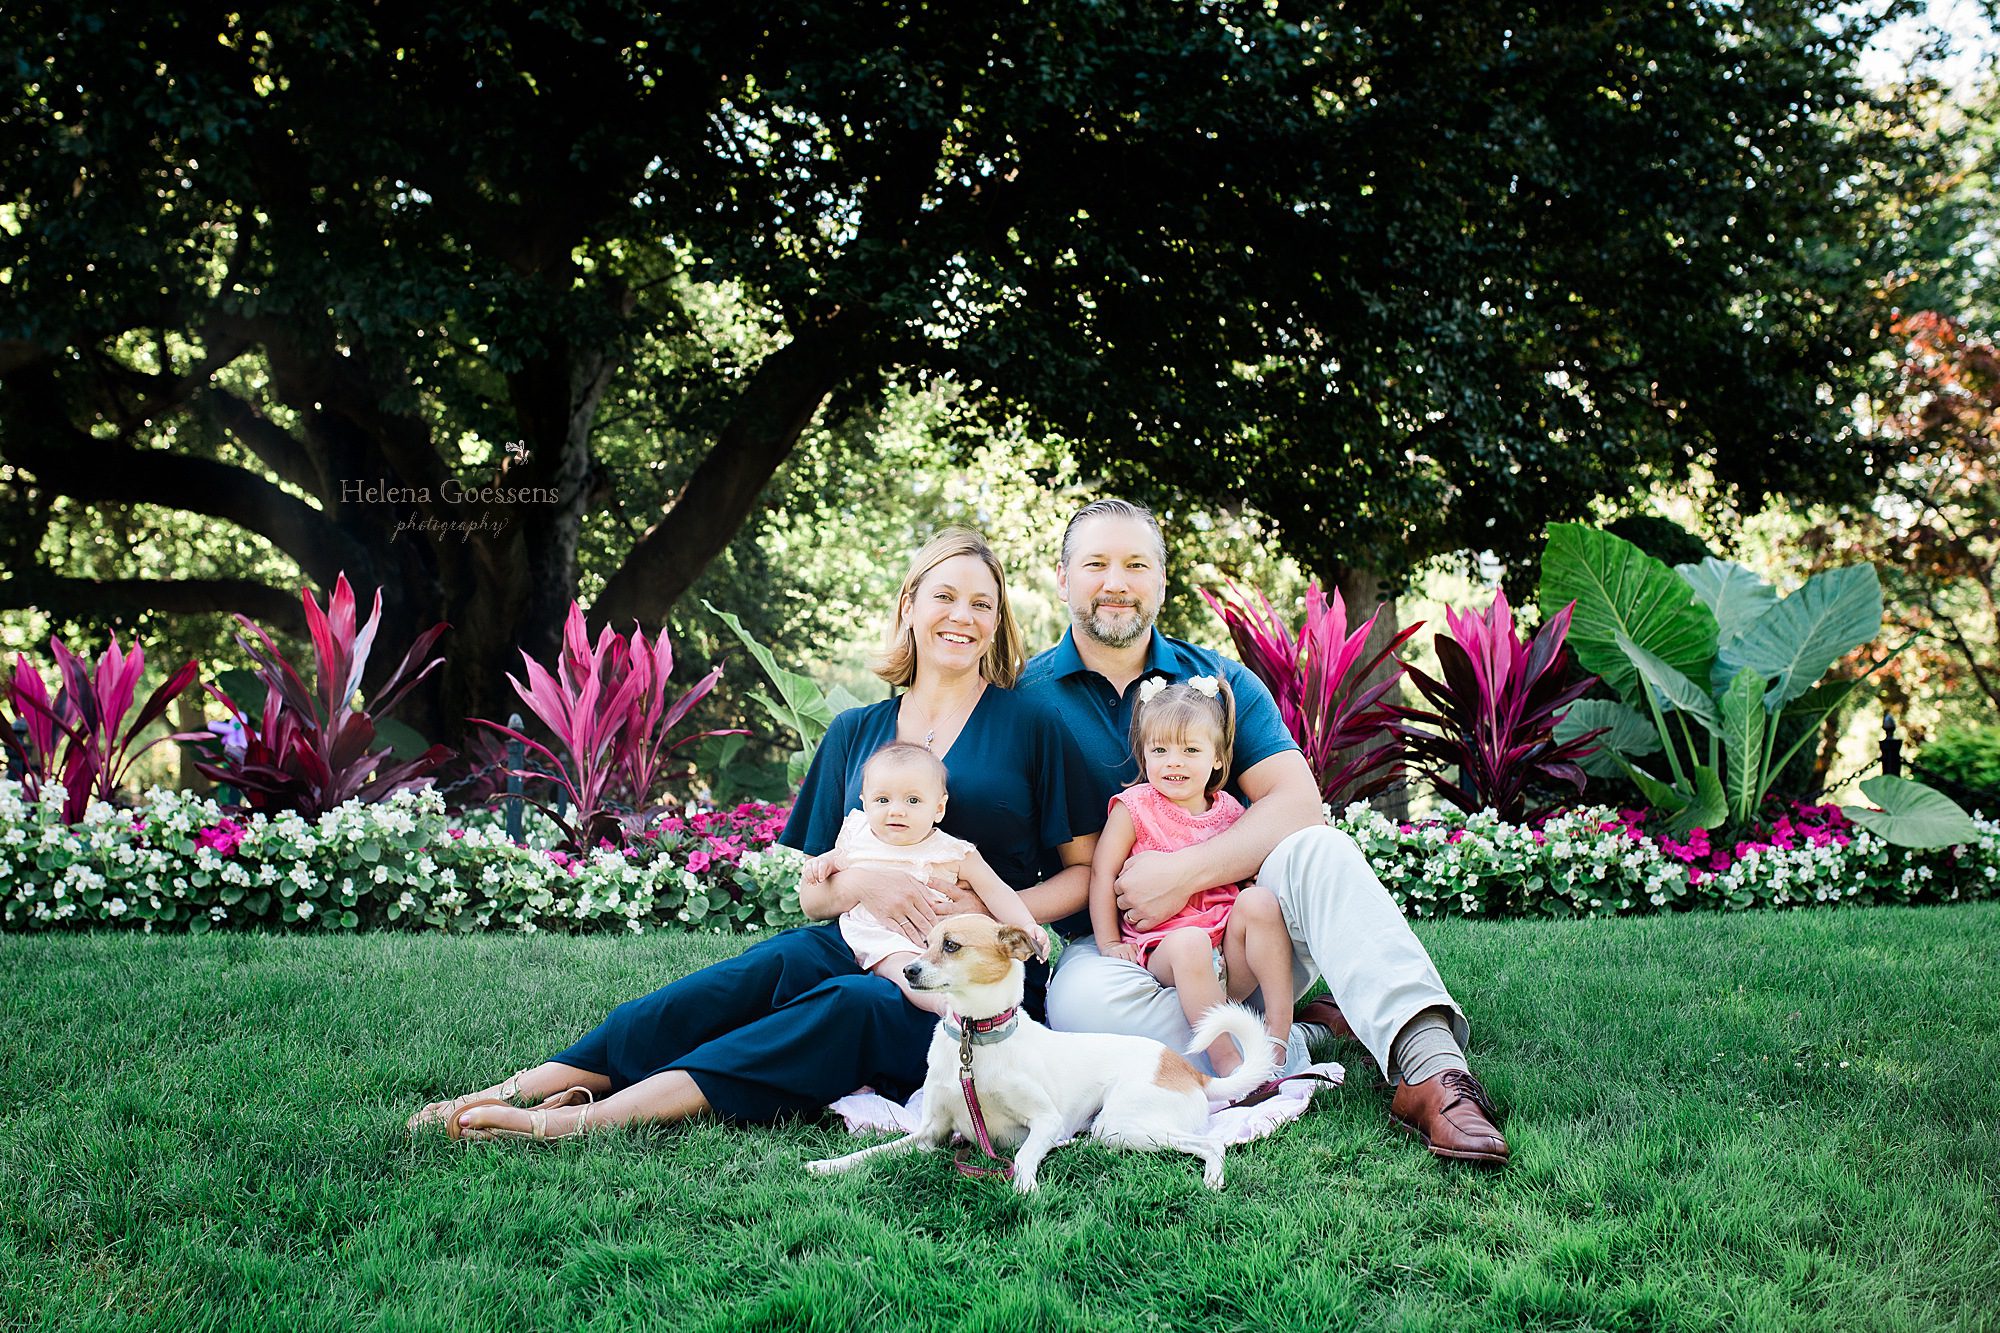 Boston family portraits with Helena Goessens Photography